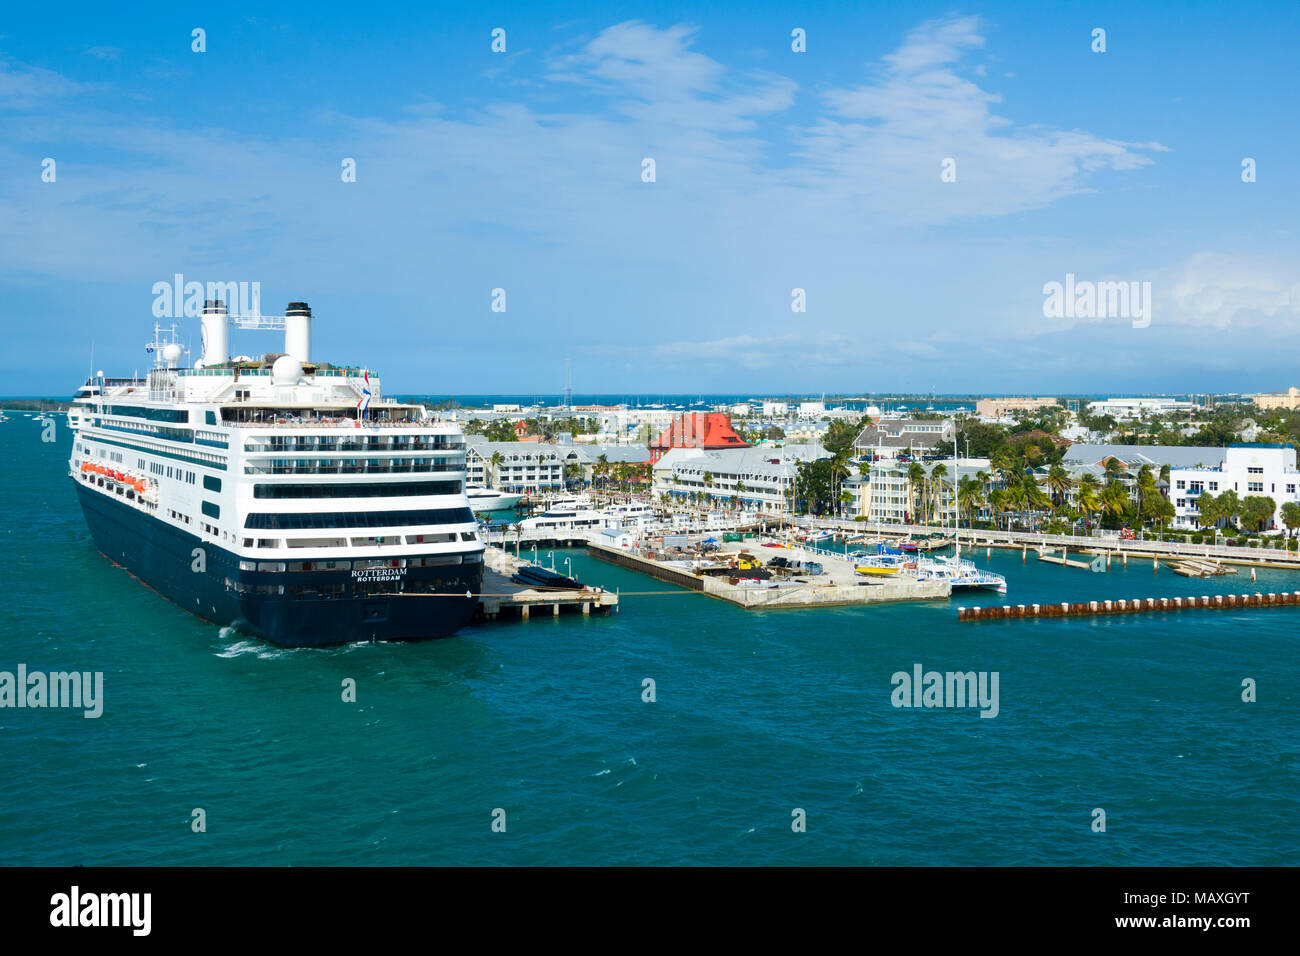 Holland America Rotterdam Cruise ship at the popular Florida destination of Key West Stock Photo